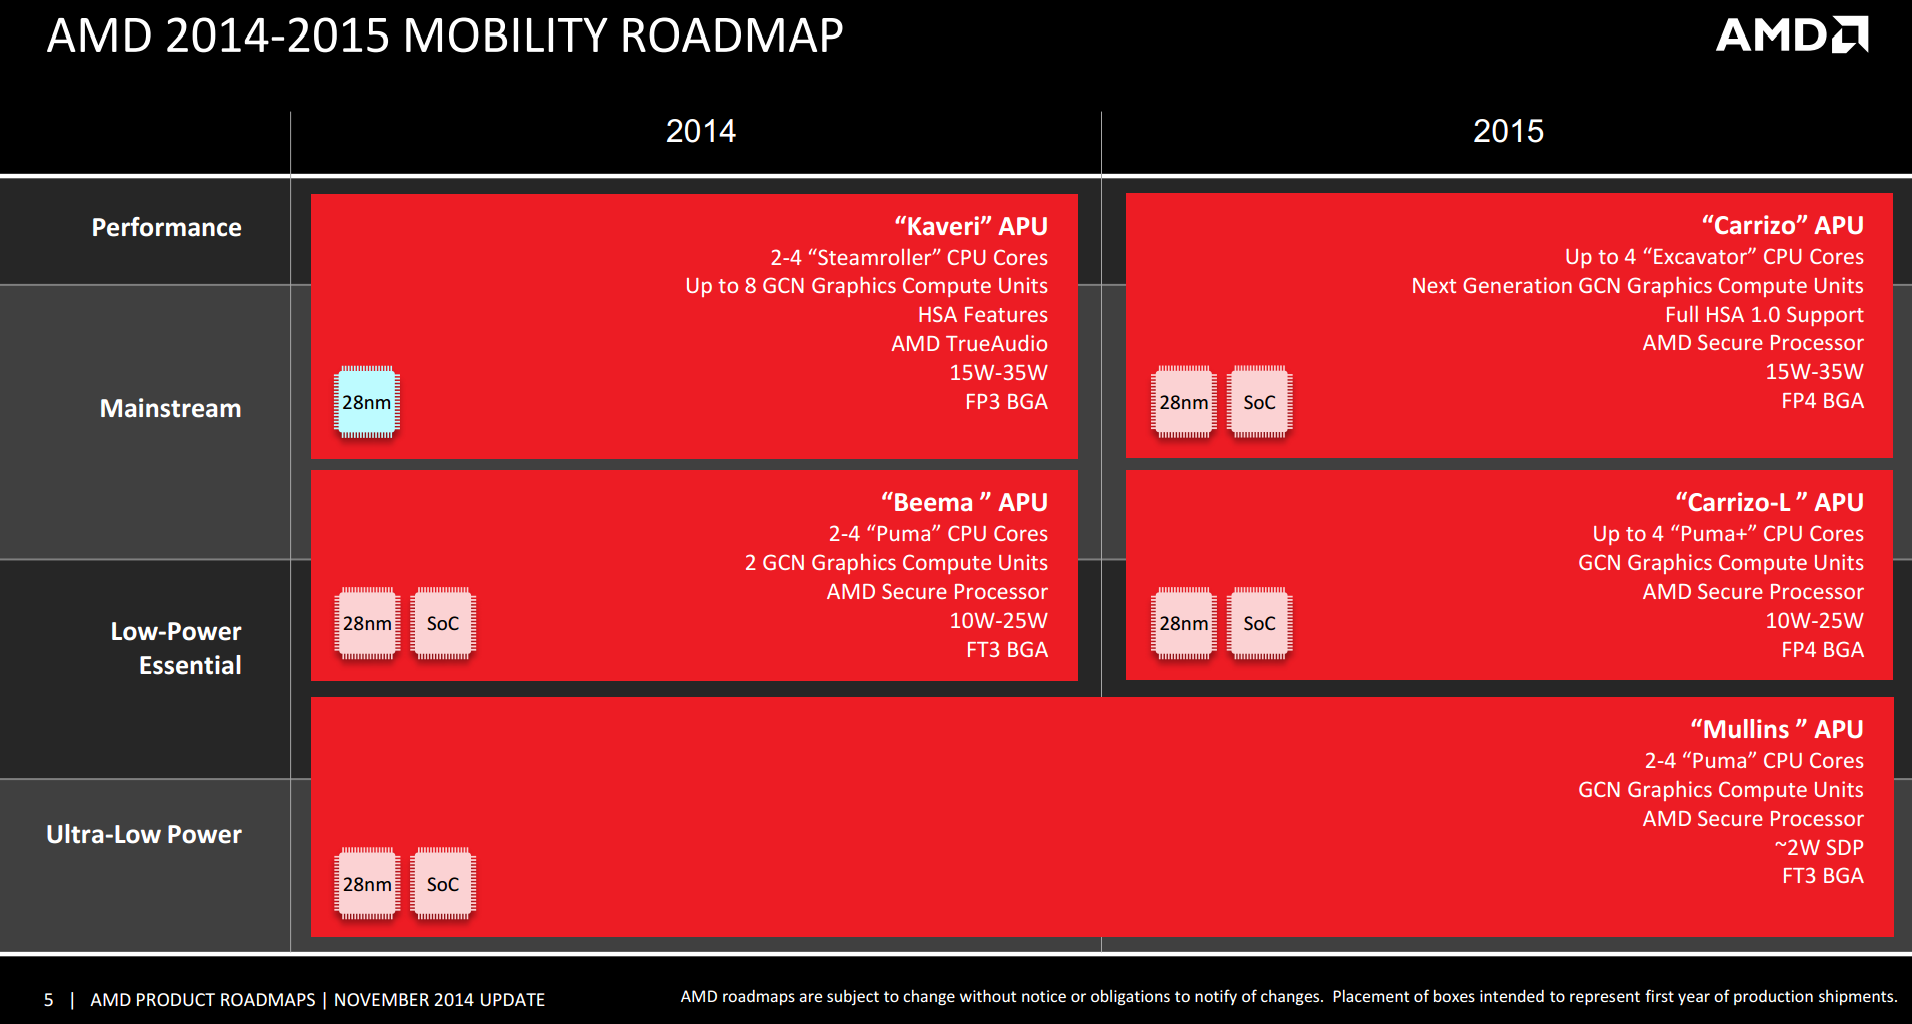 Mobility Roadmap